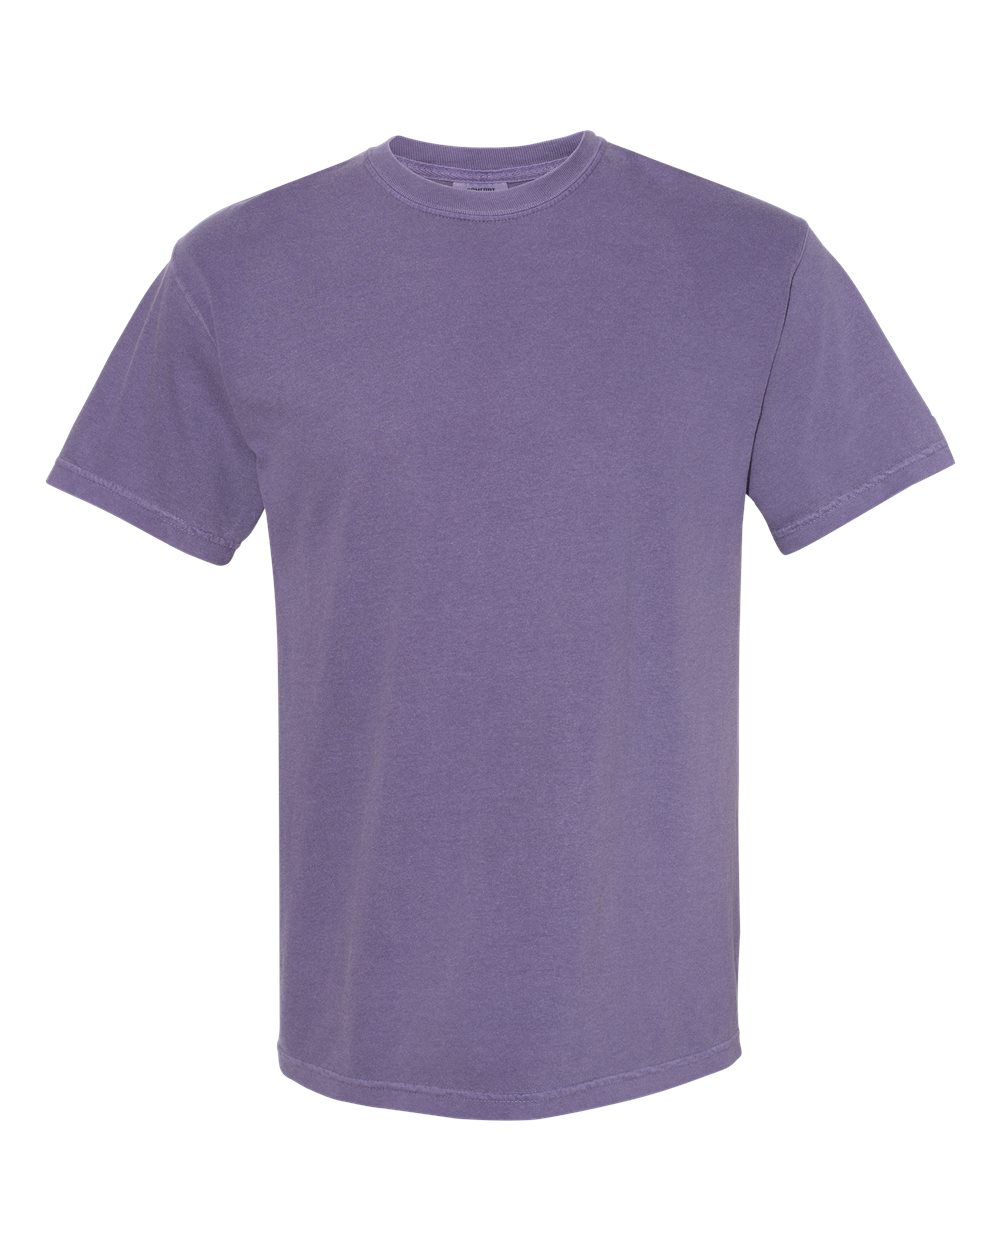 "Build A Tee" Dark Colors - Comfort Colors Short Sleeve T-Shirt